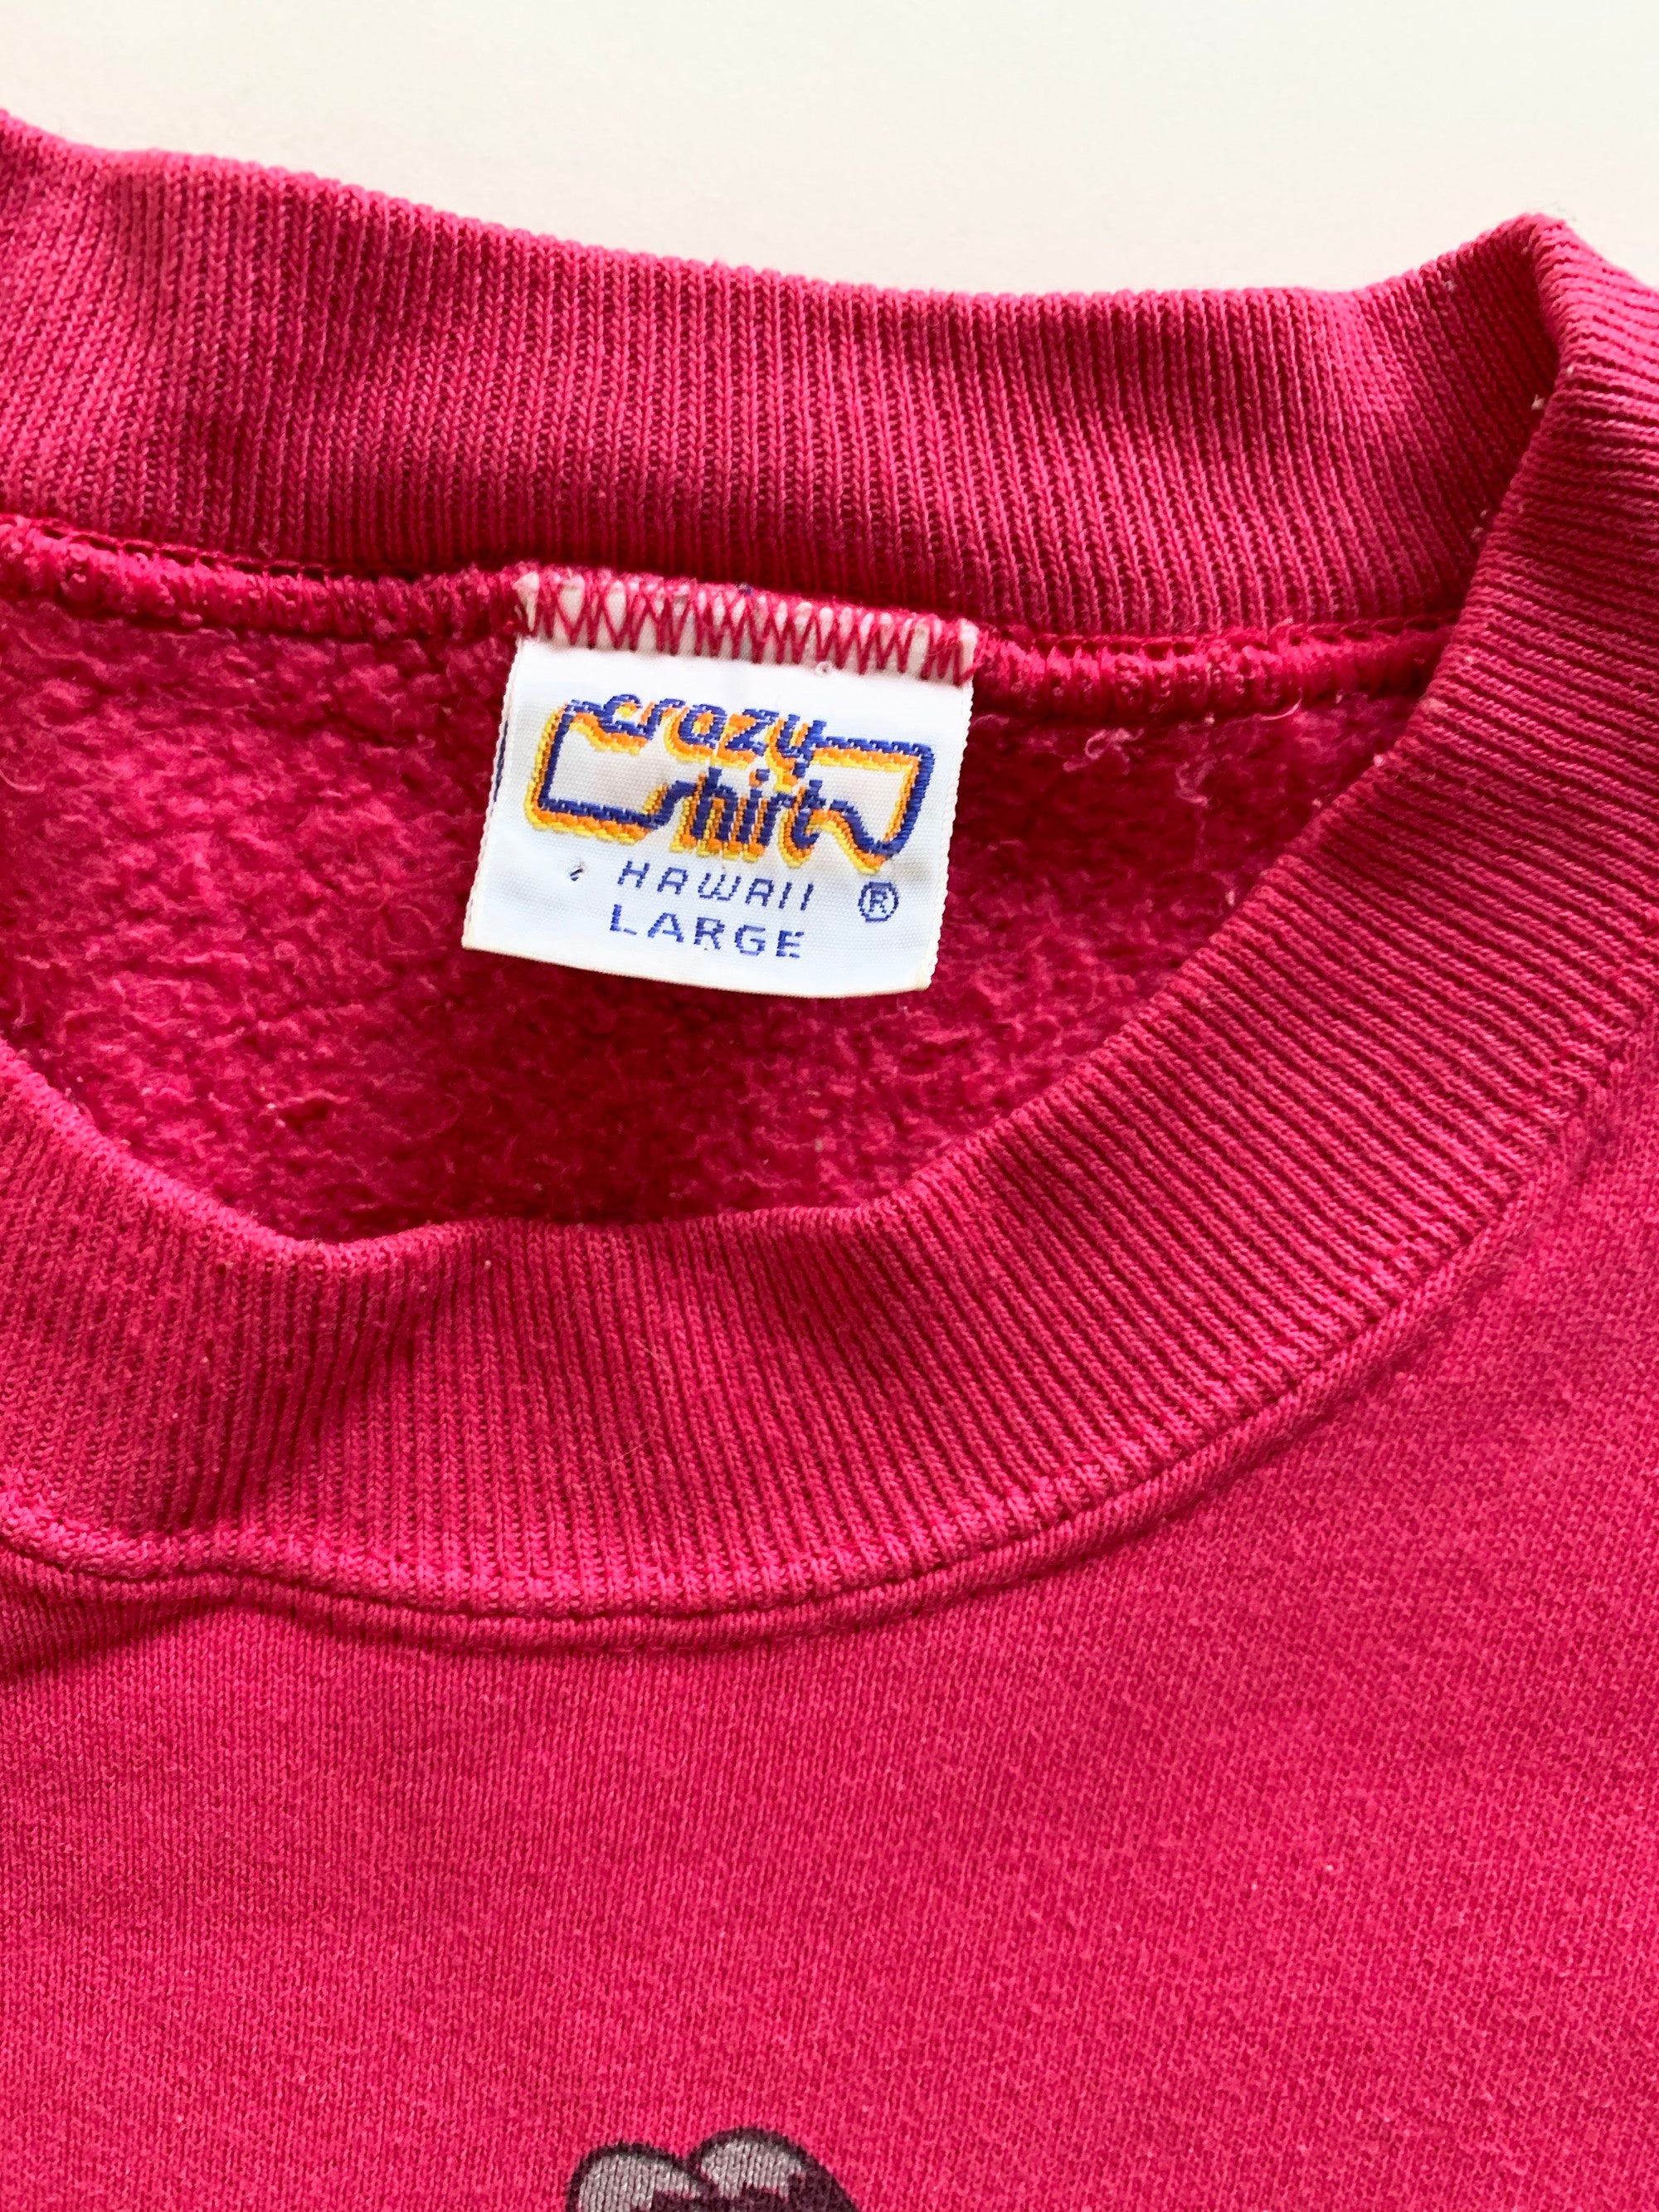 Crazy Shirt】クリバンキャット スキープリント ヘビーウエイト